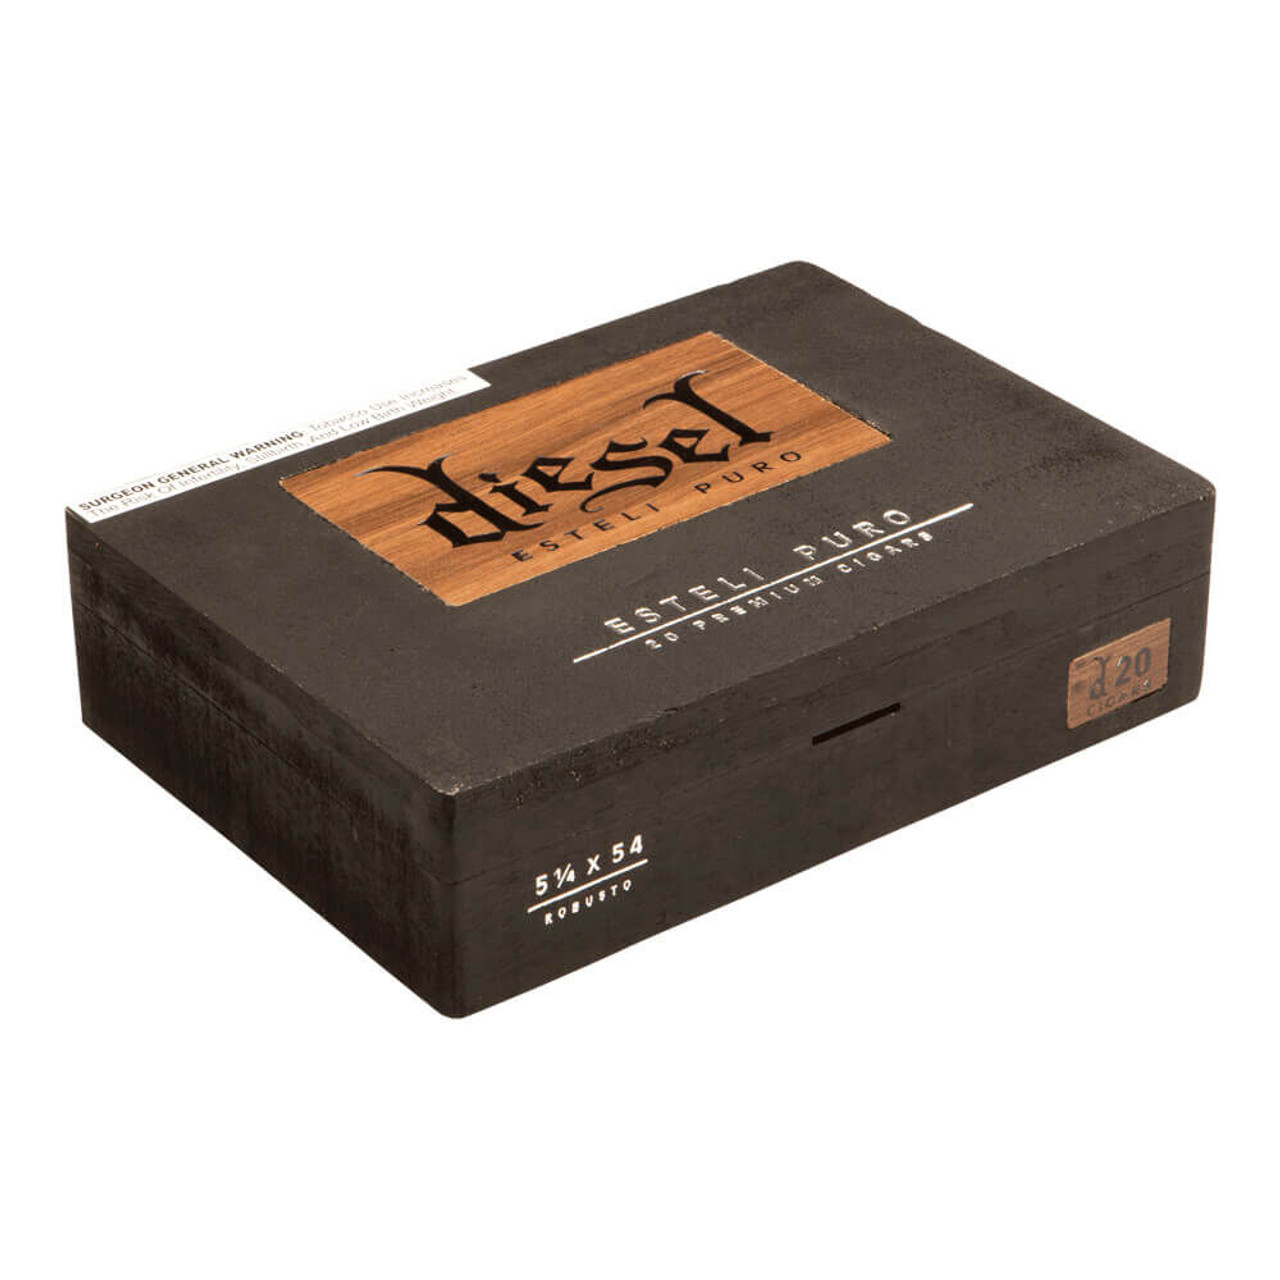 Diesel Esteli Puro Robusto Cigars - 5.25 x 54 (Box of 20)